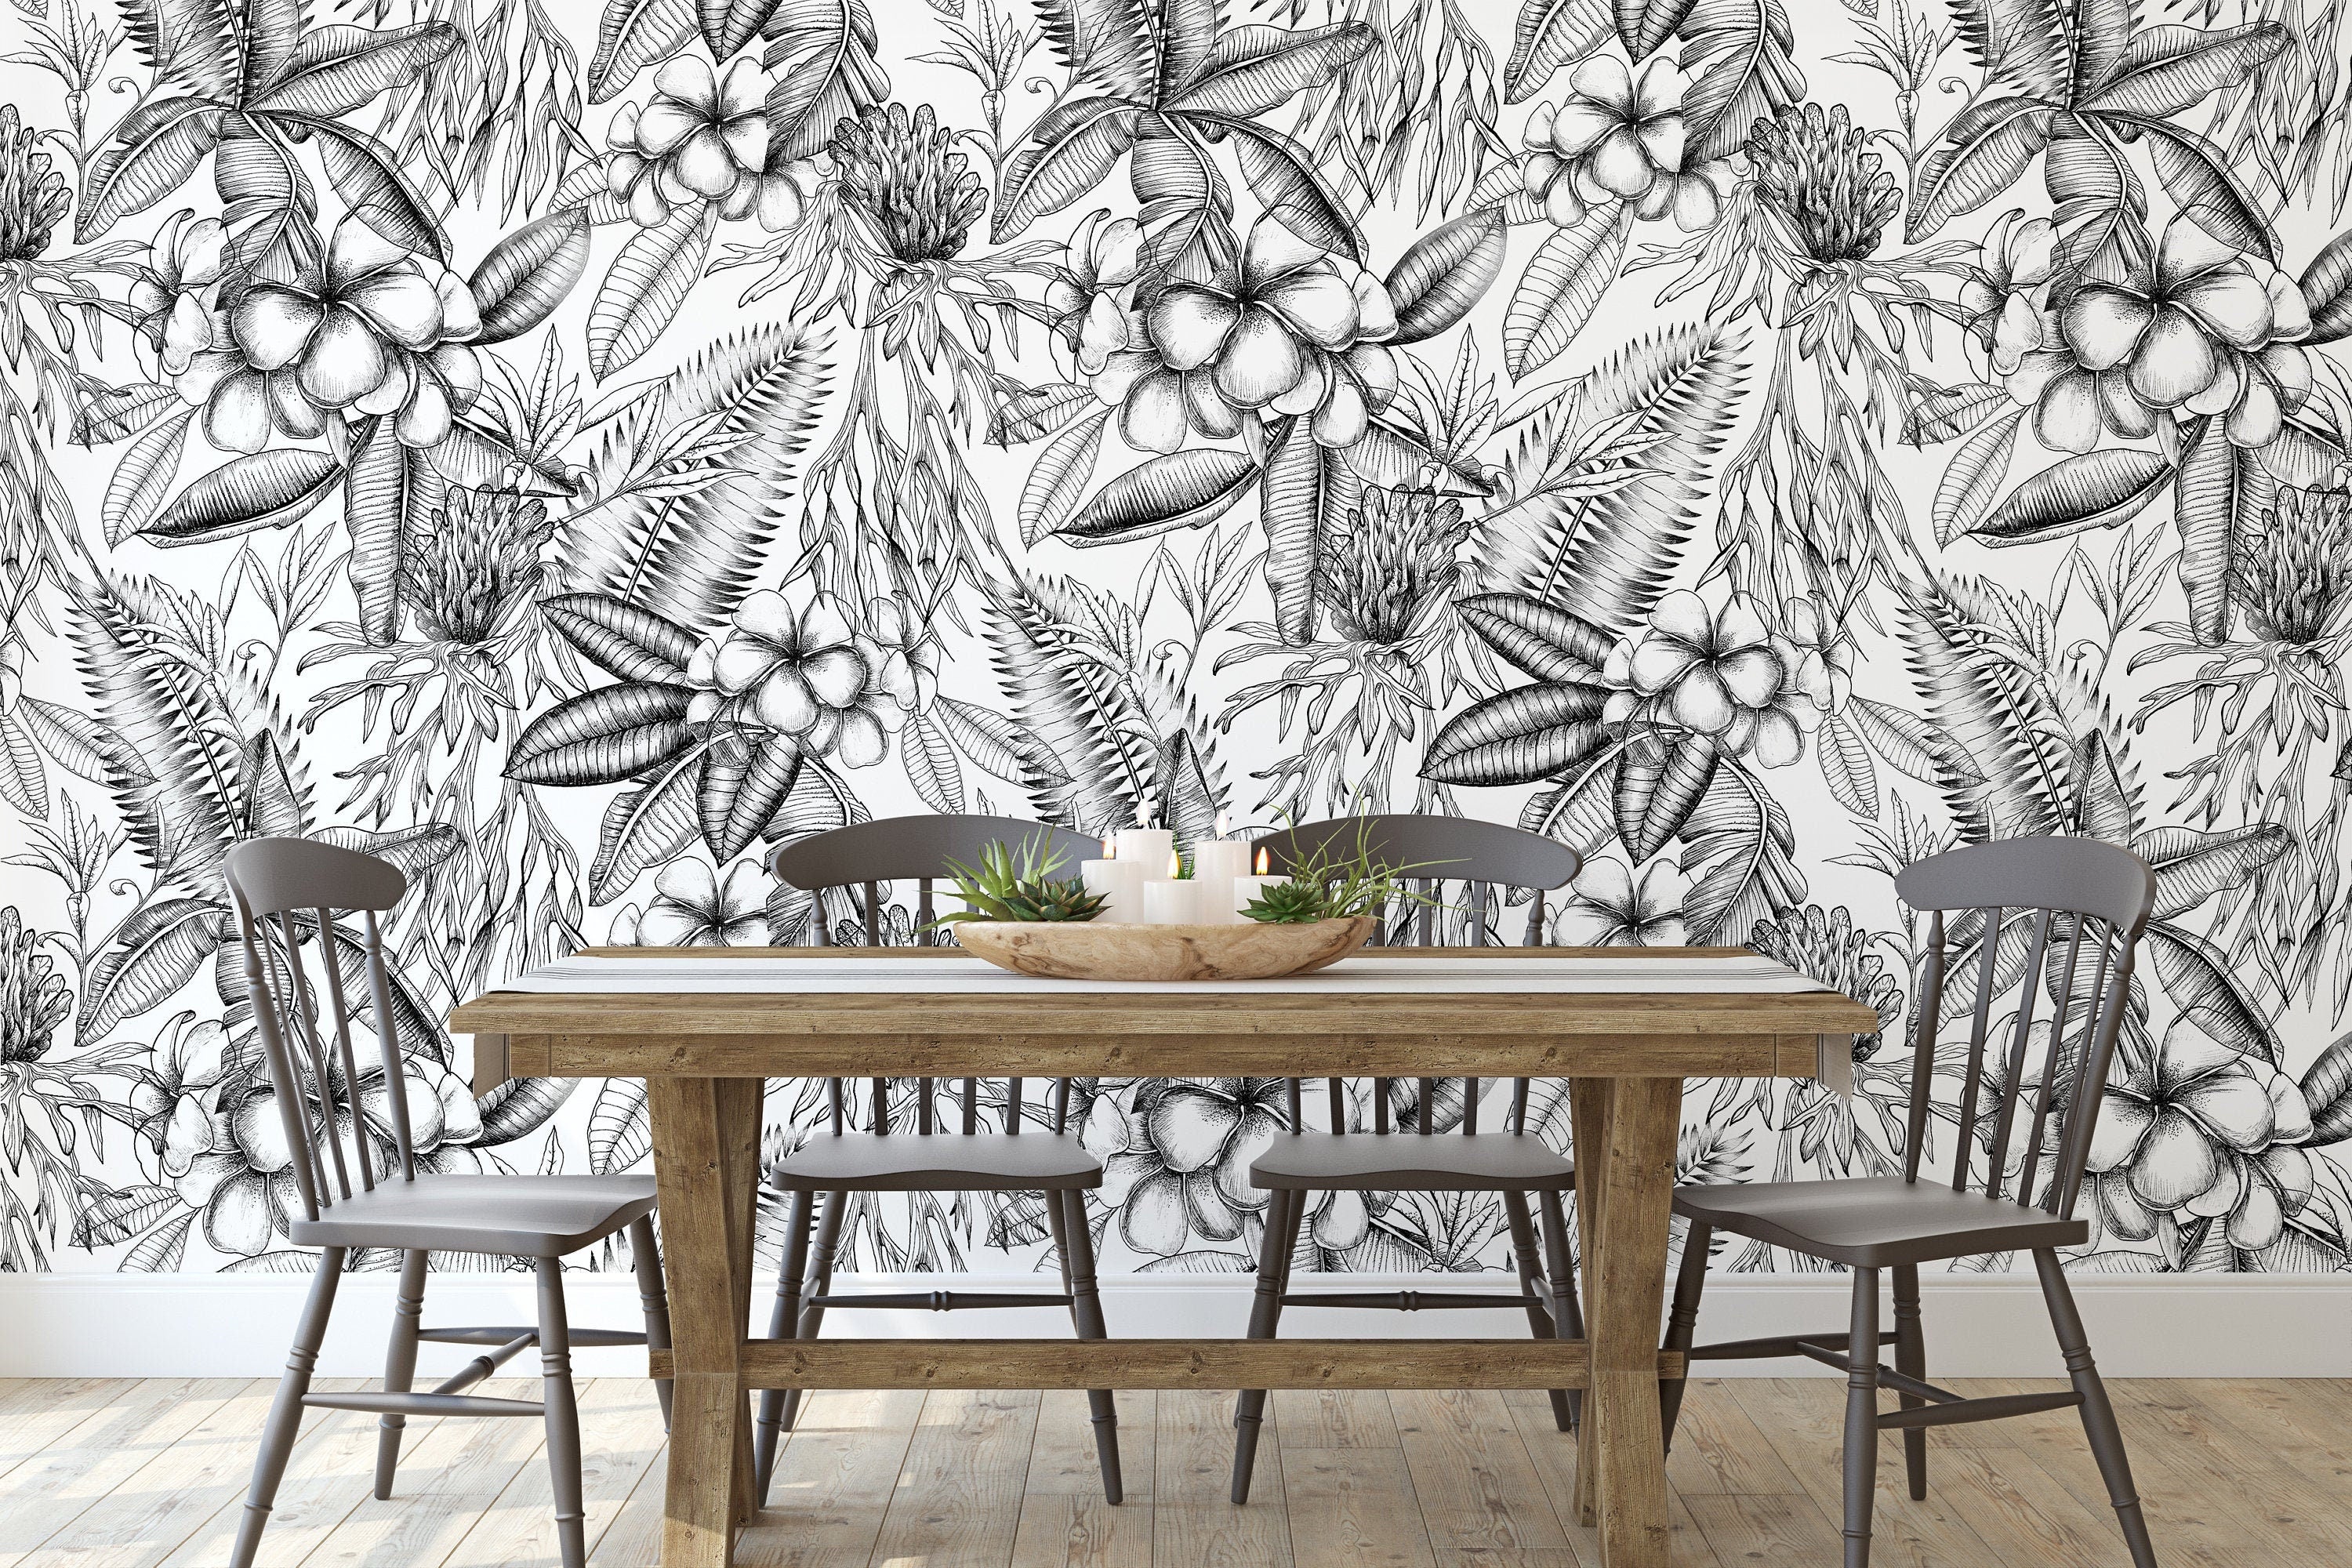 Black White Tropical Wallpaper | Removable Wallpaper | Peel And Stick Wallpaper | Wall Mural Wallpaper | Wall Paper Peel And Stick 2334 - JamesAndColors